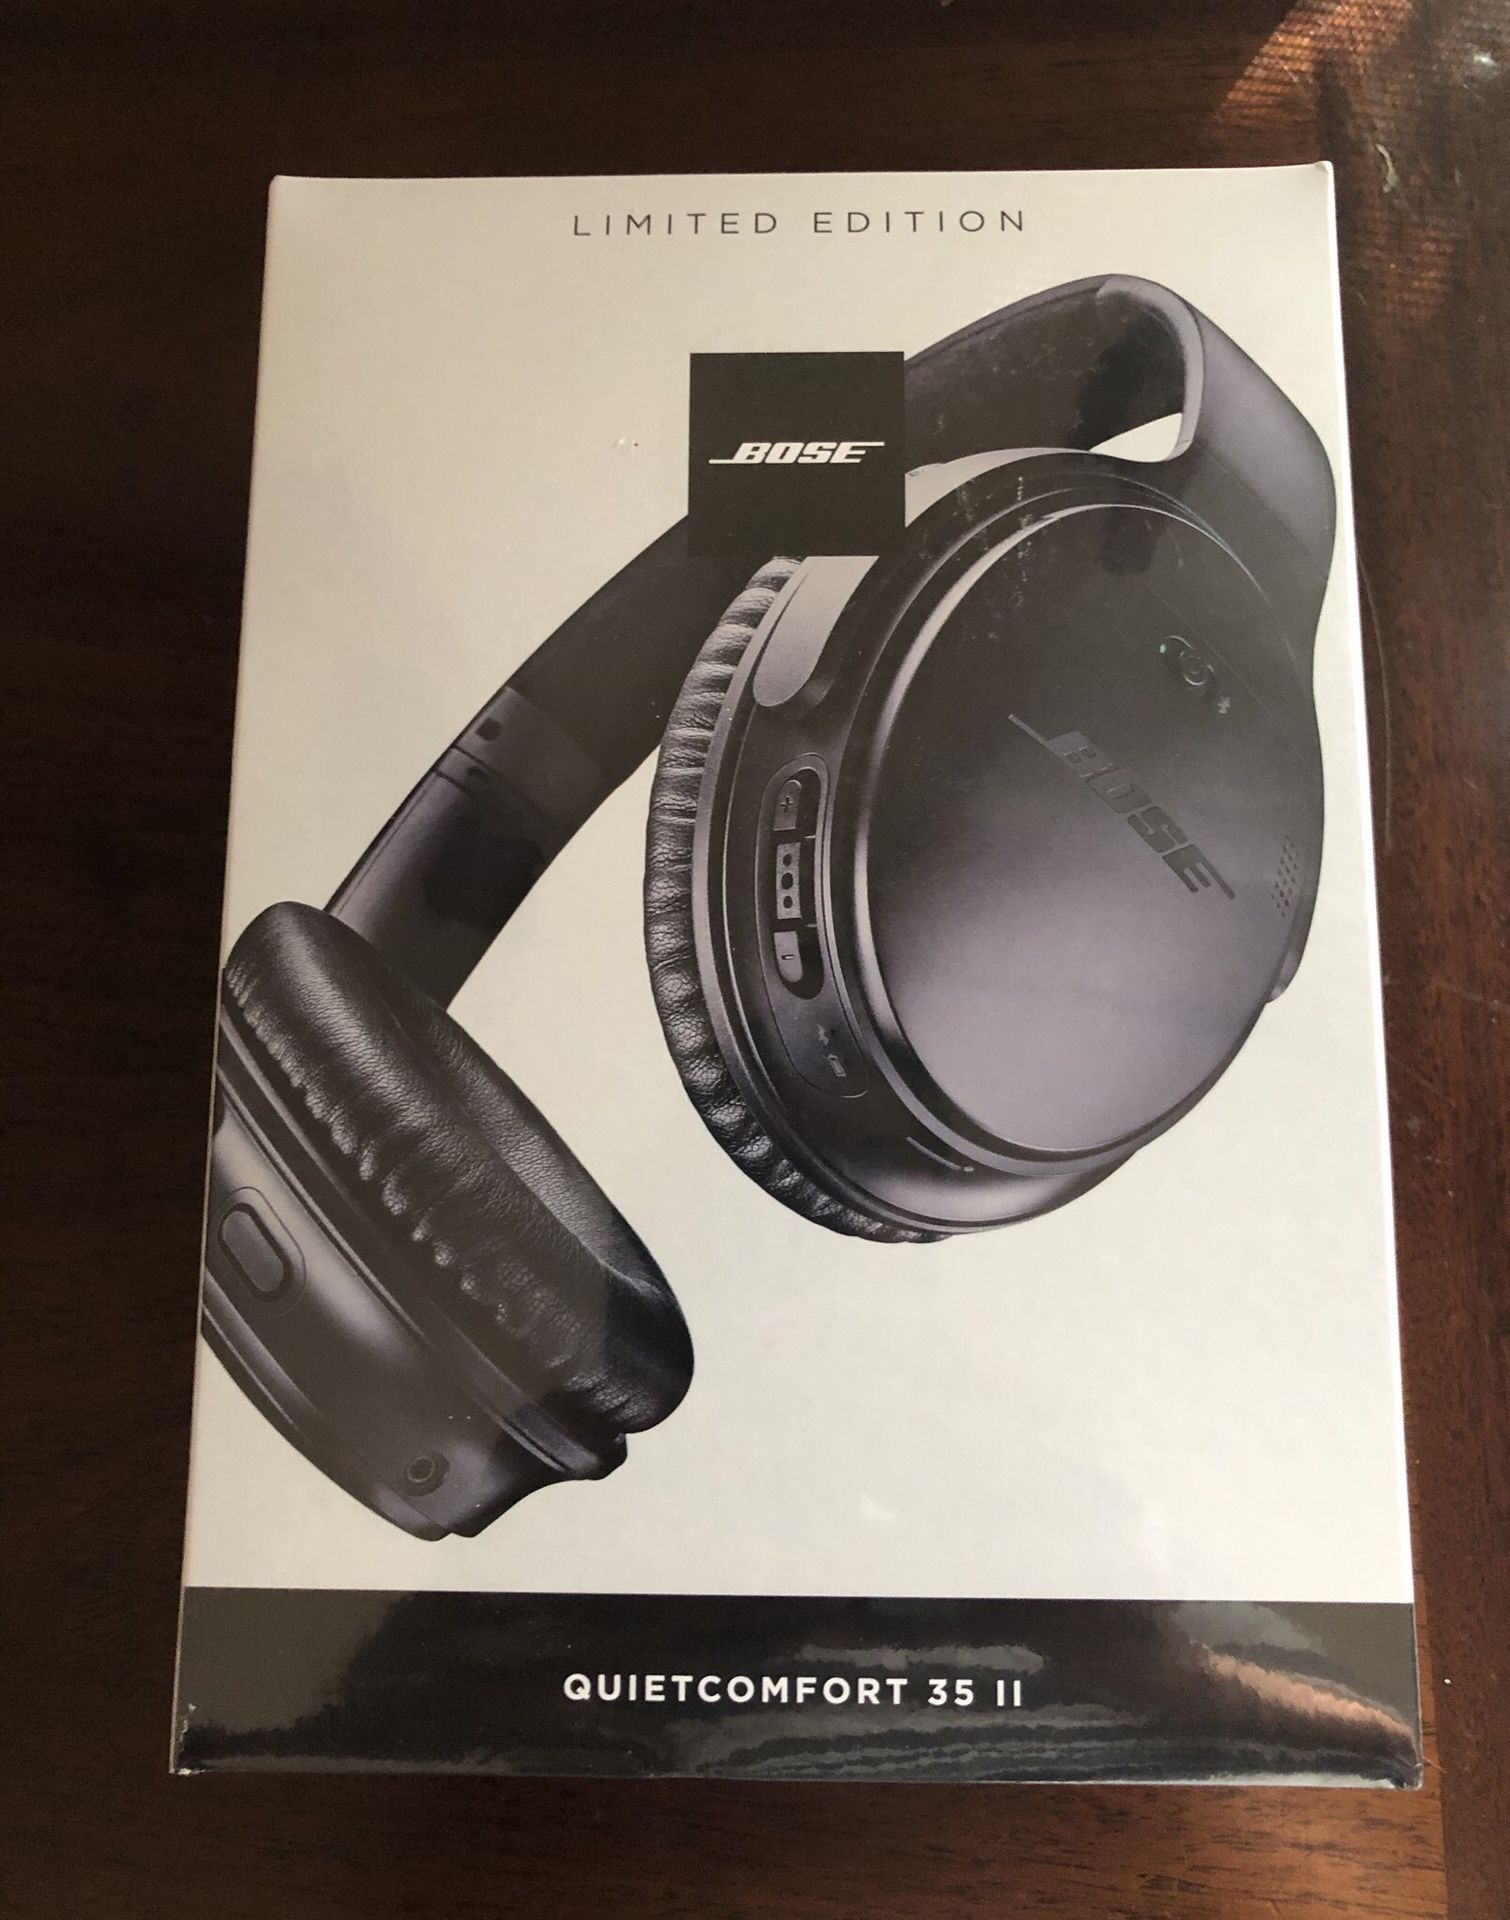 Limited Edition Headphones - Bose Quietcomfort 35 II